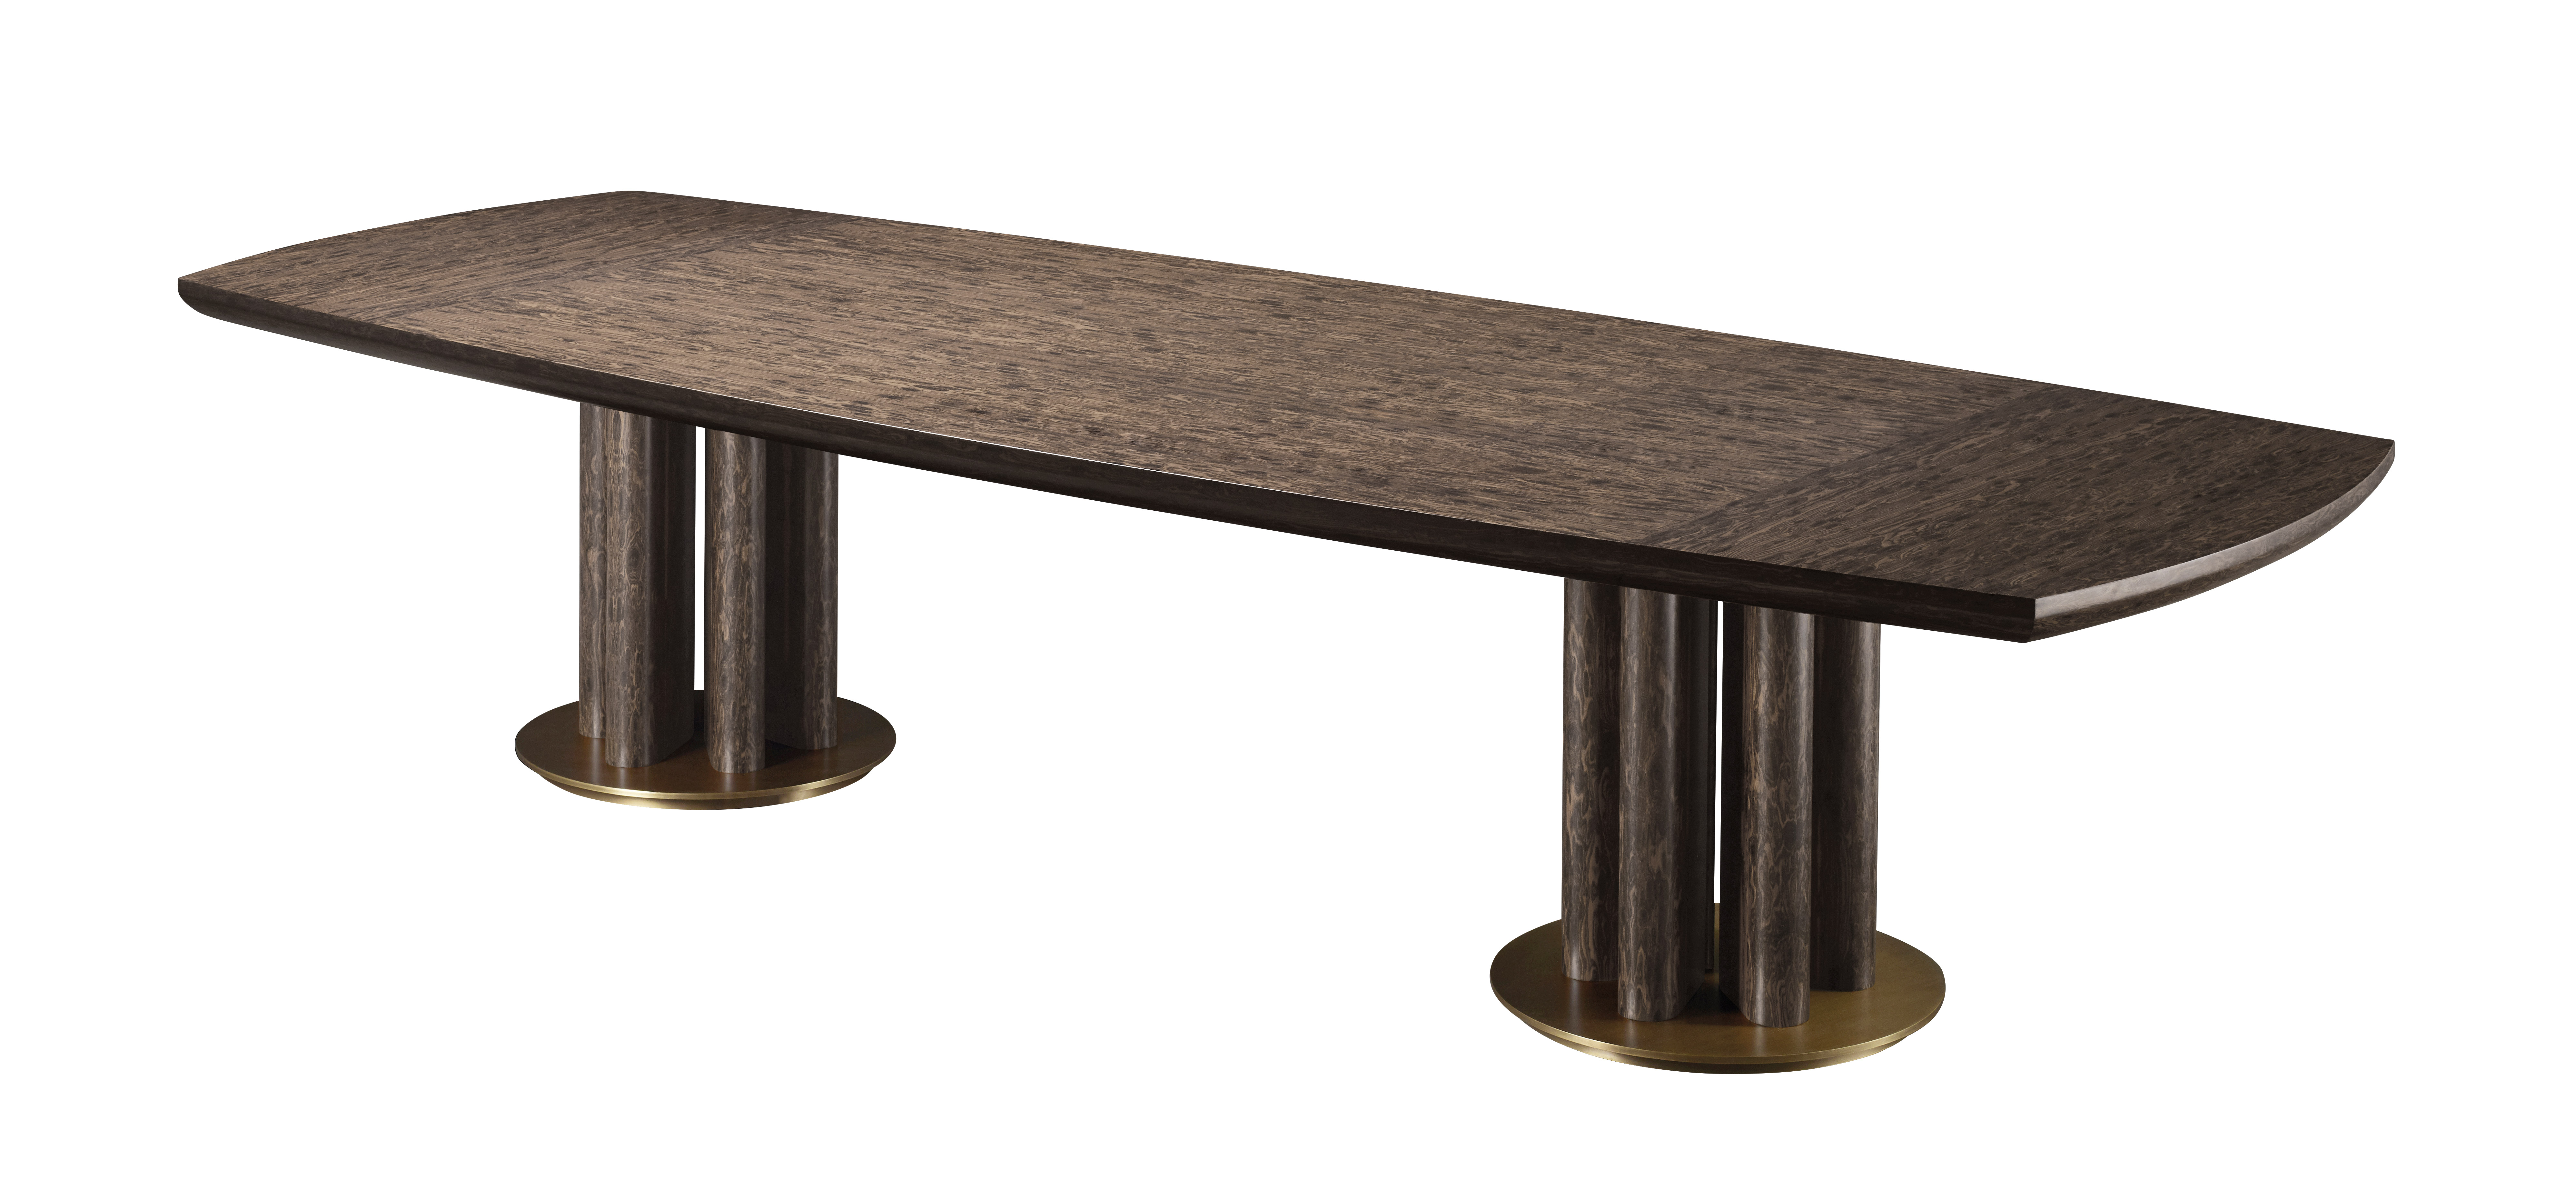 Orazio — обеденный стол из дерева или бронзы из коллекции Amaranthine Tales компании Promemoria | Promemoria